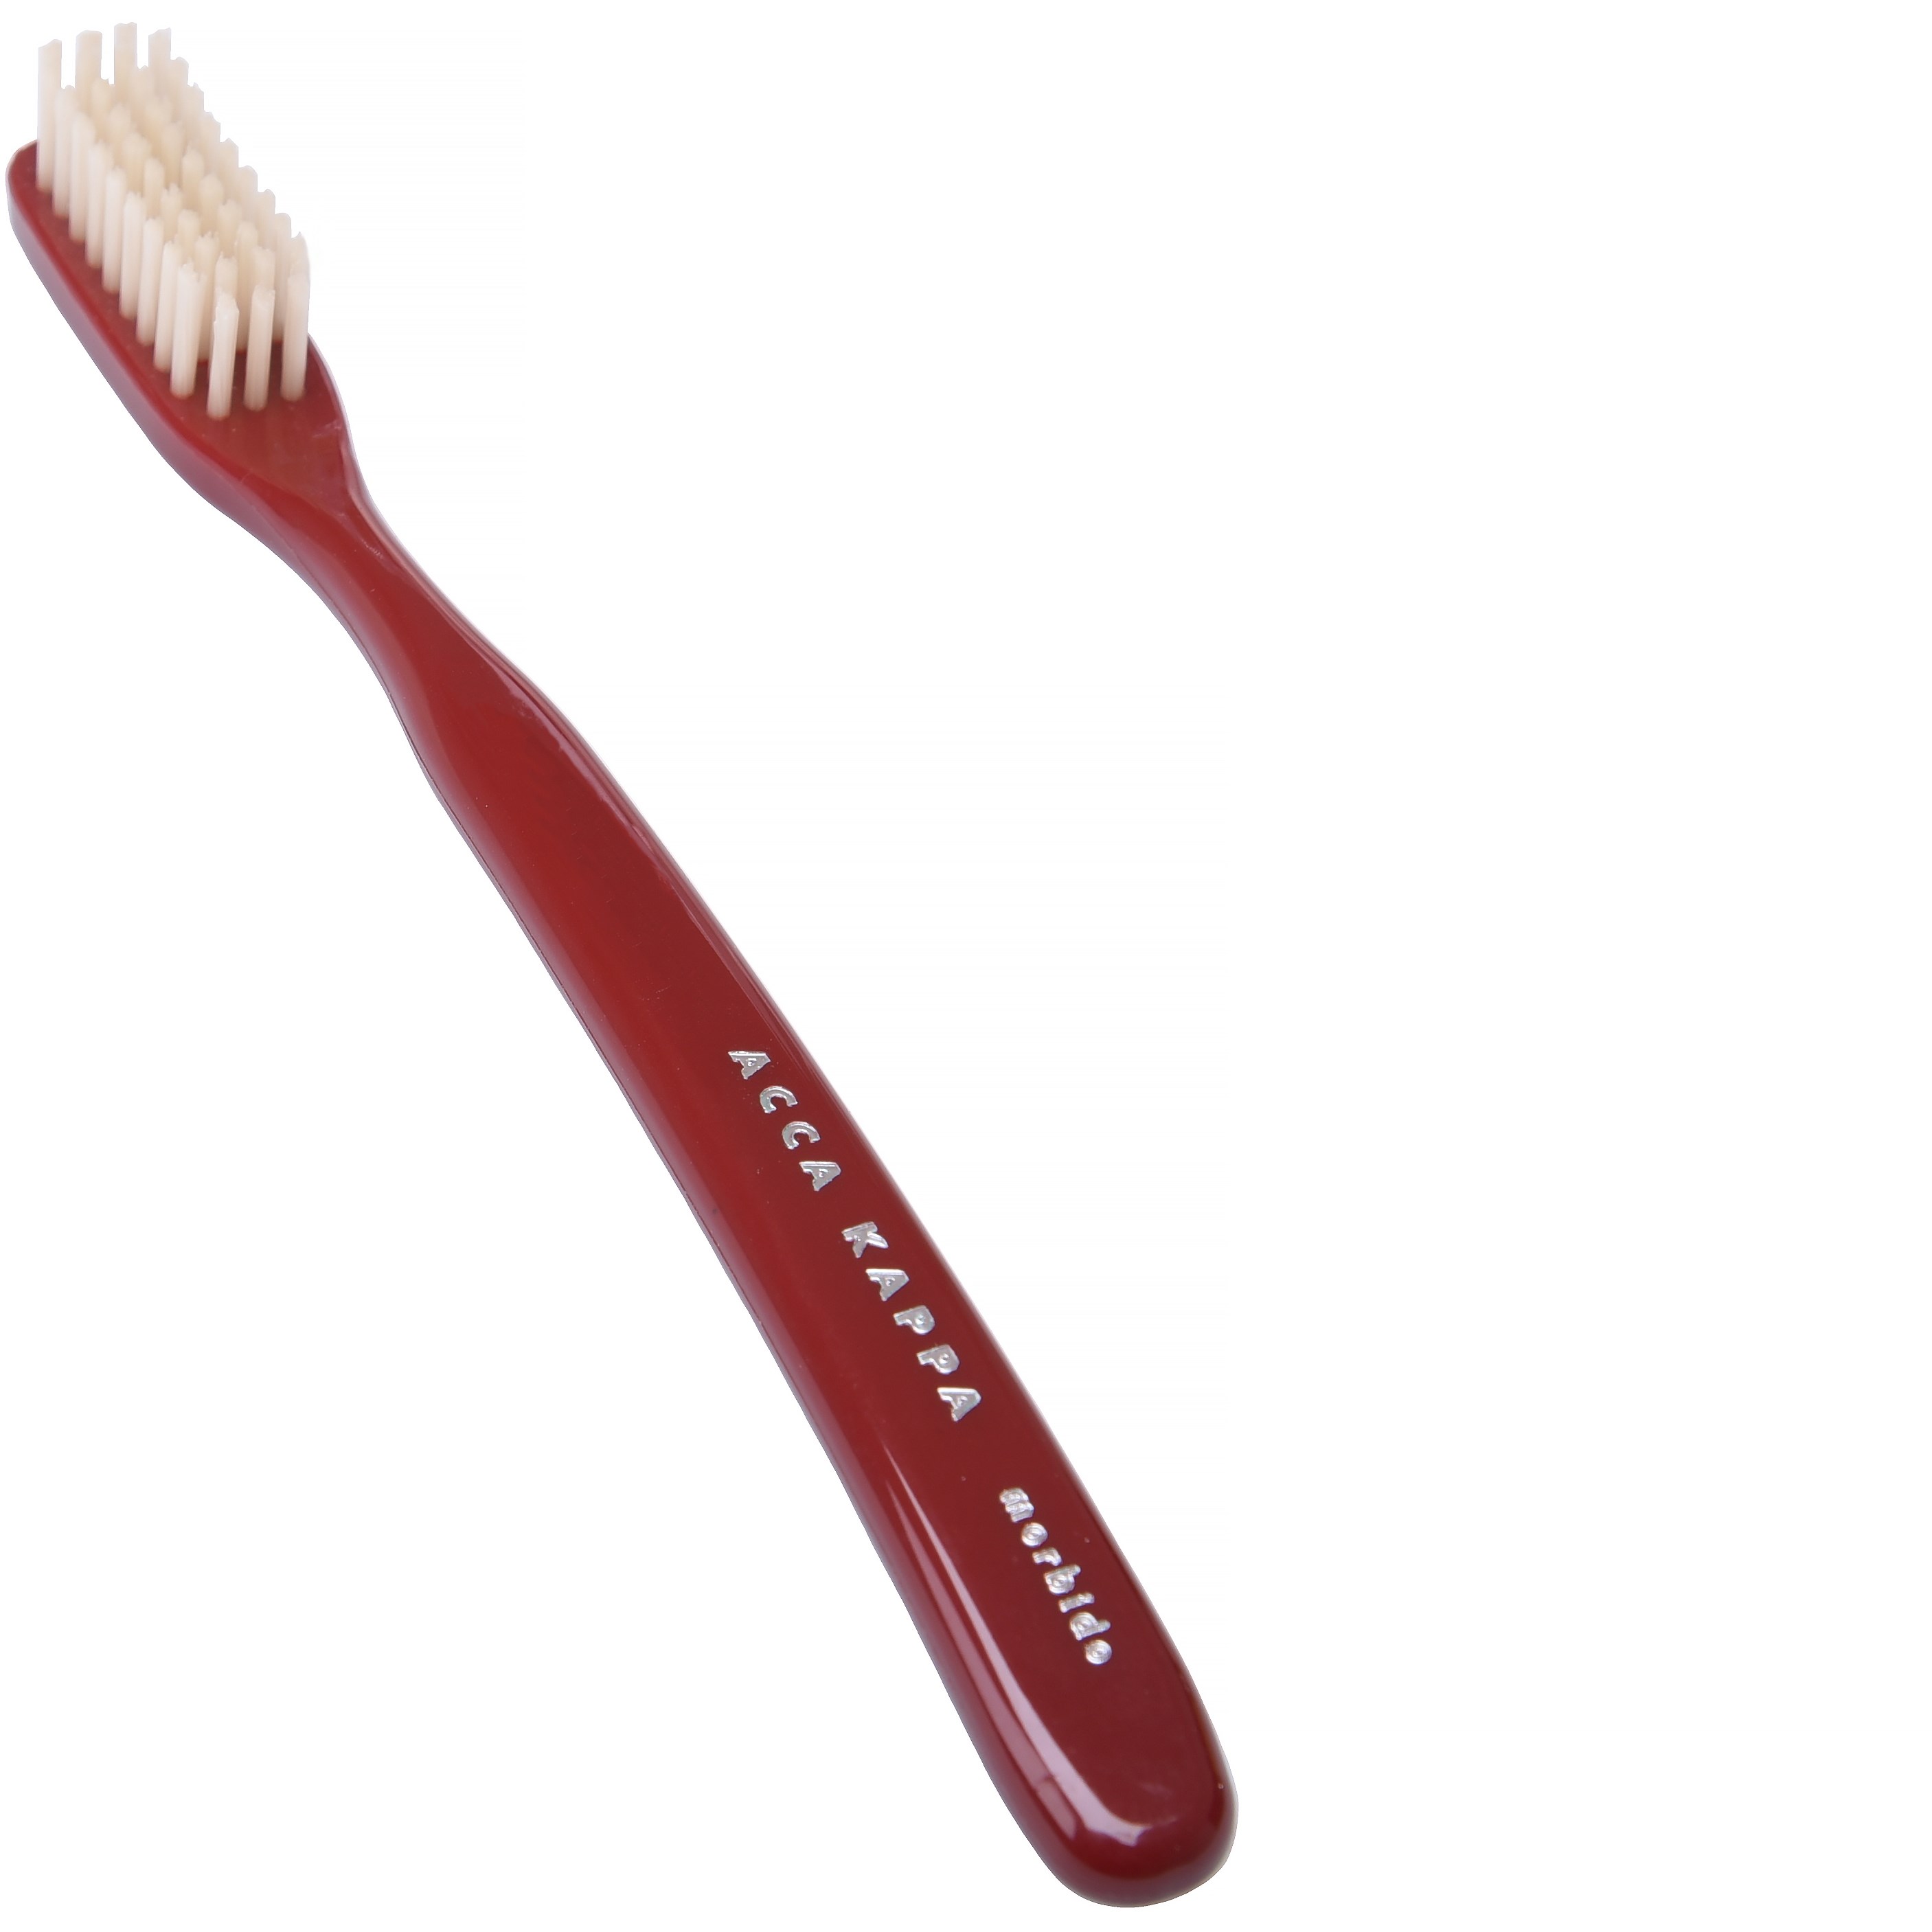 Bilde av Acca Kappa Tooth Brush Vintage Hard Nylon Bristles Red